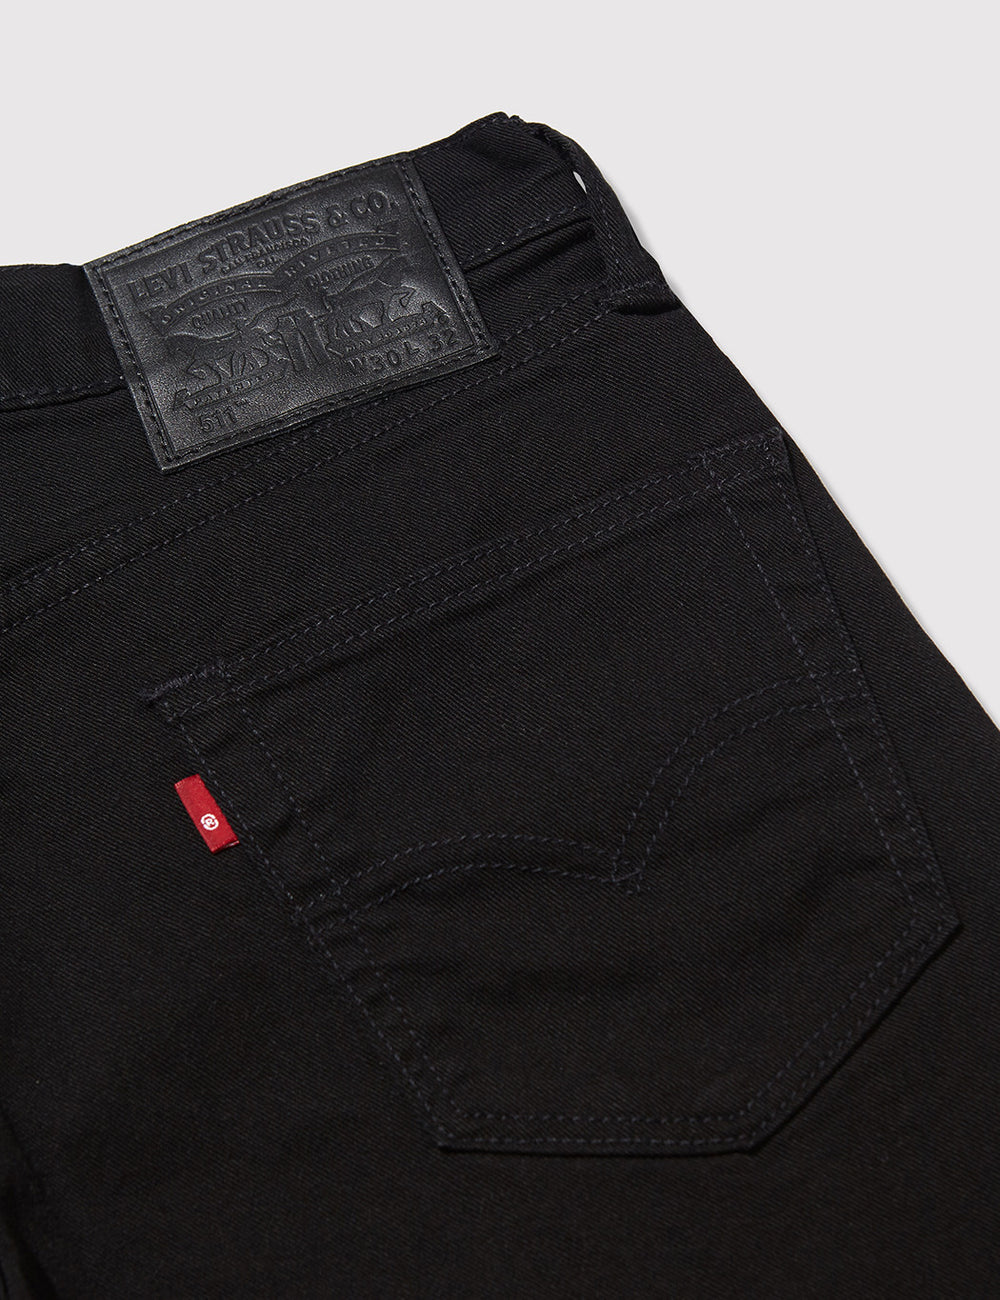 Levis 511 Jeans (Slim) - Nightshine Black | URBAN EXCESS.